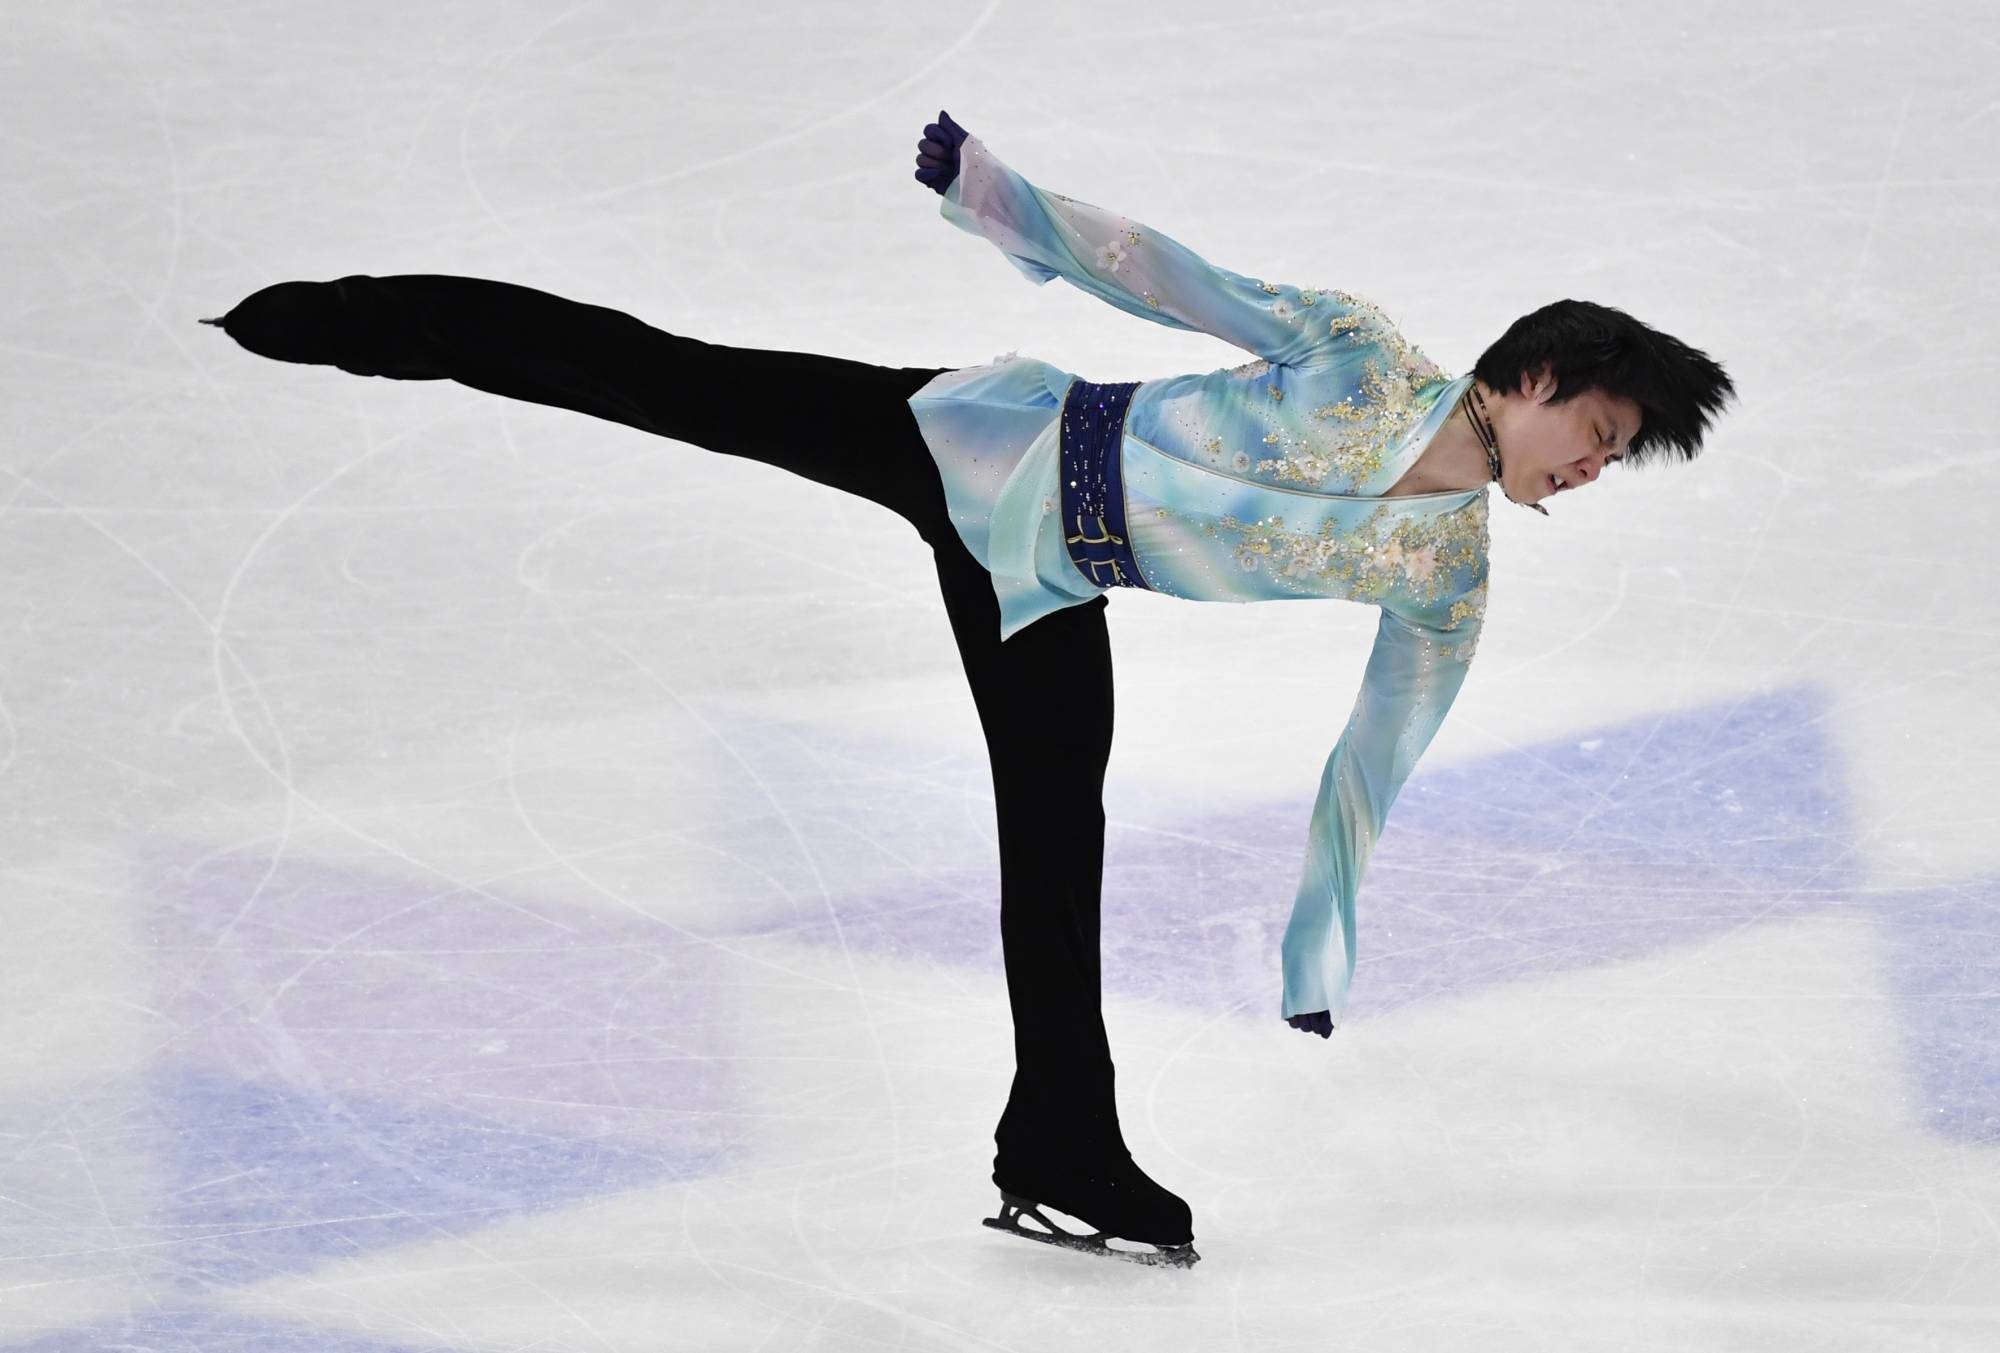 Yuzuru Hanyu to launch Beijing Games season on home ice